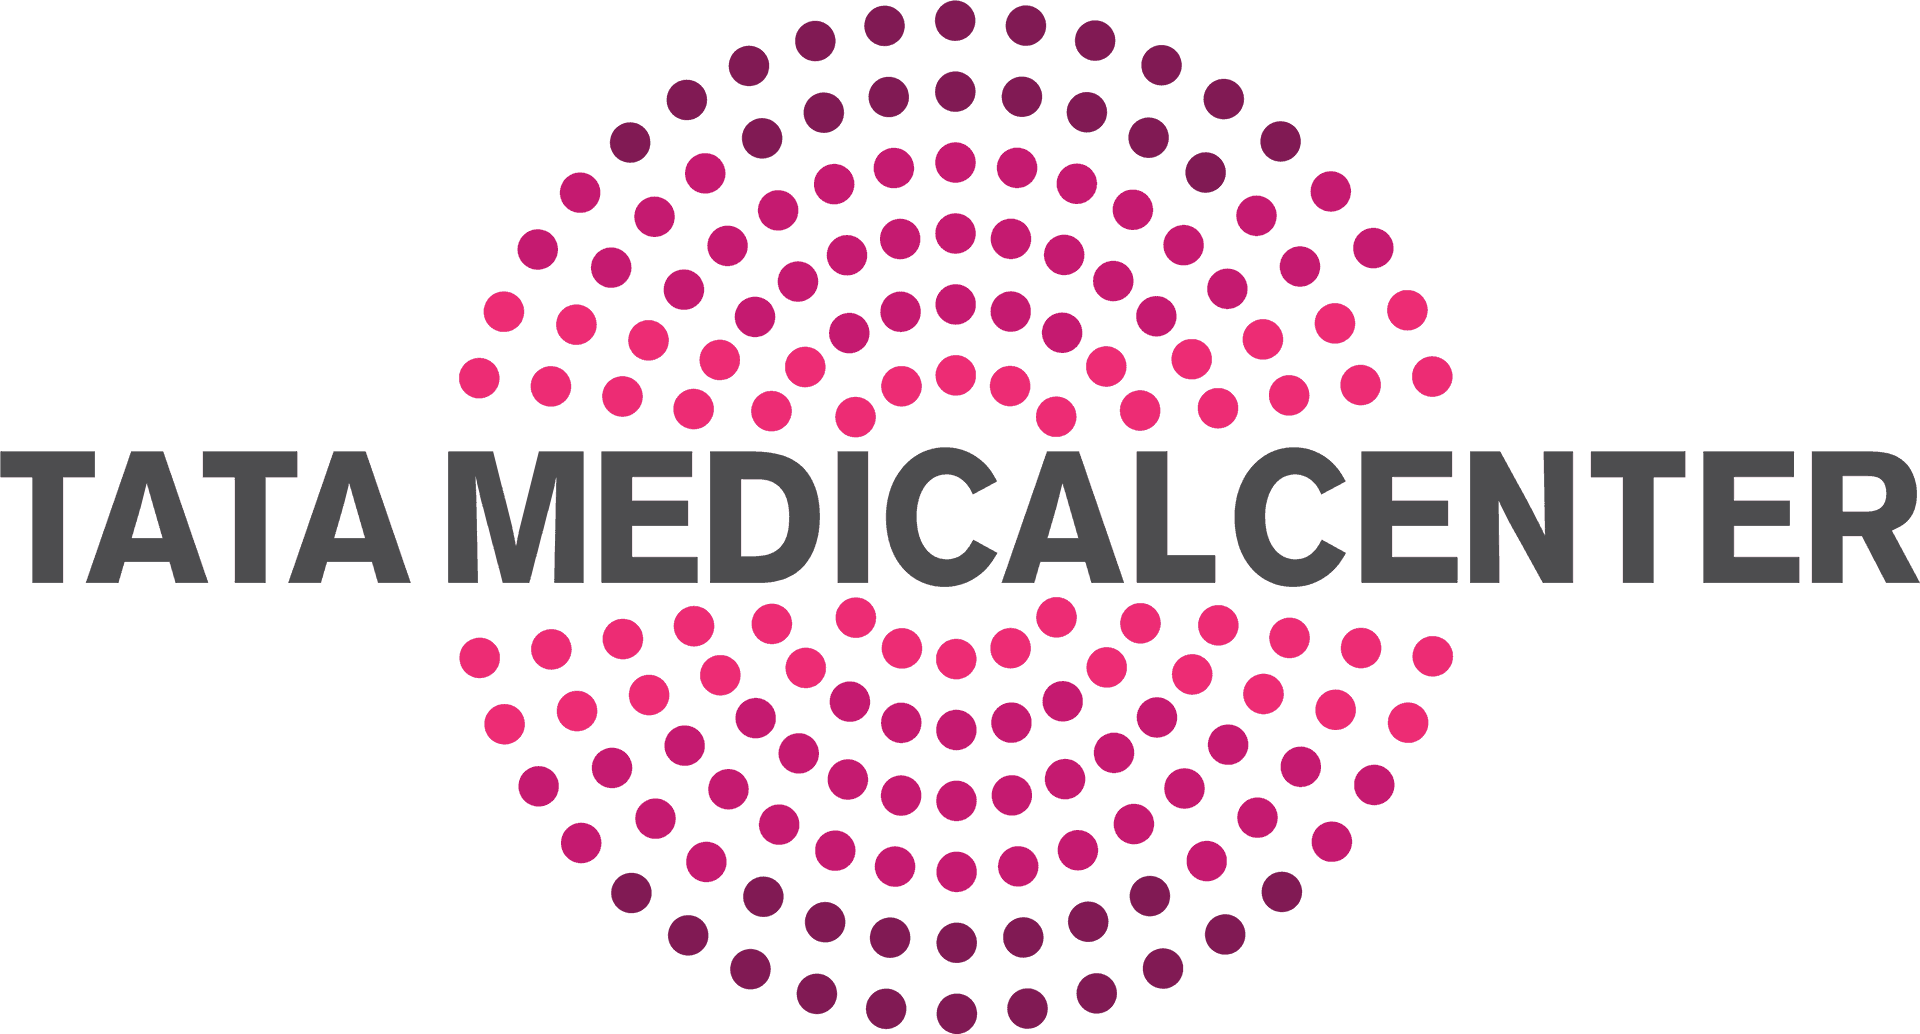 Tata Medical Center Logo PNG image